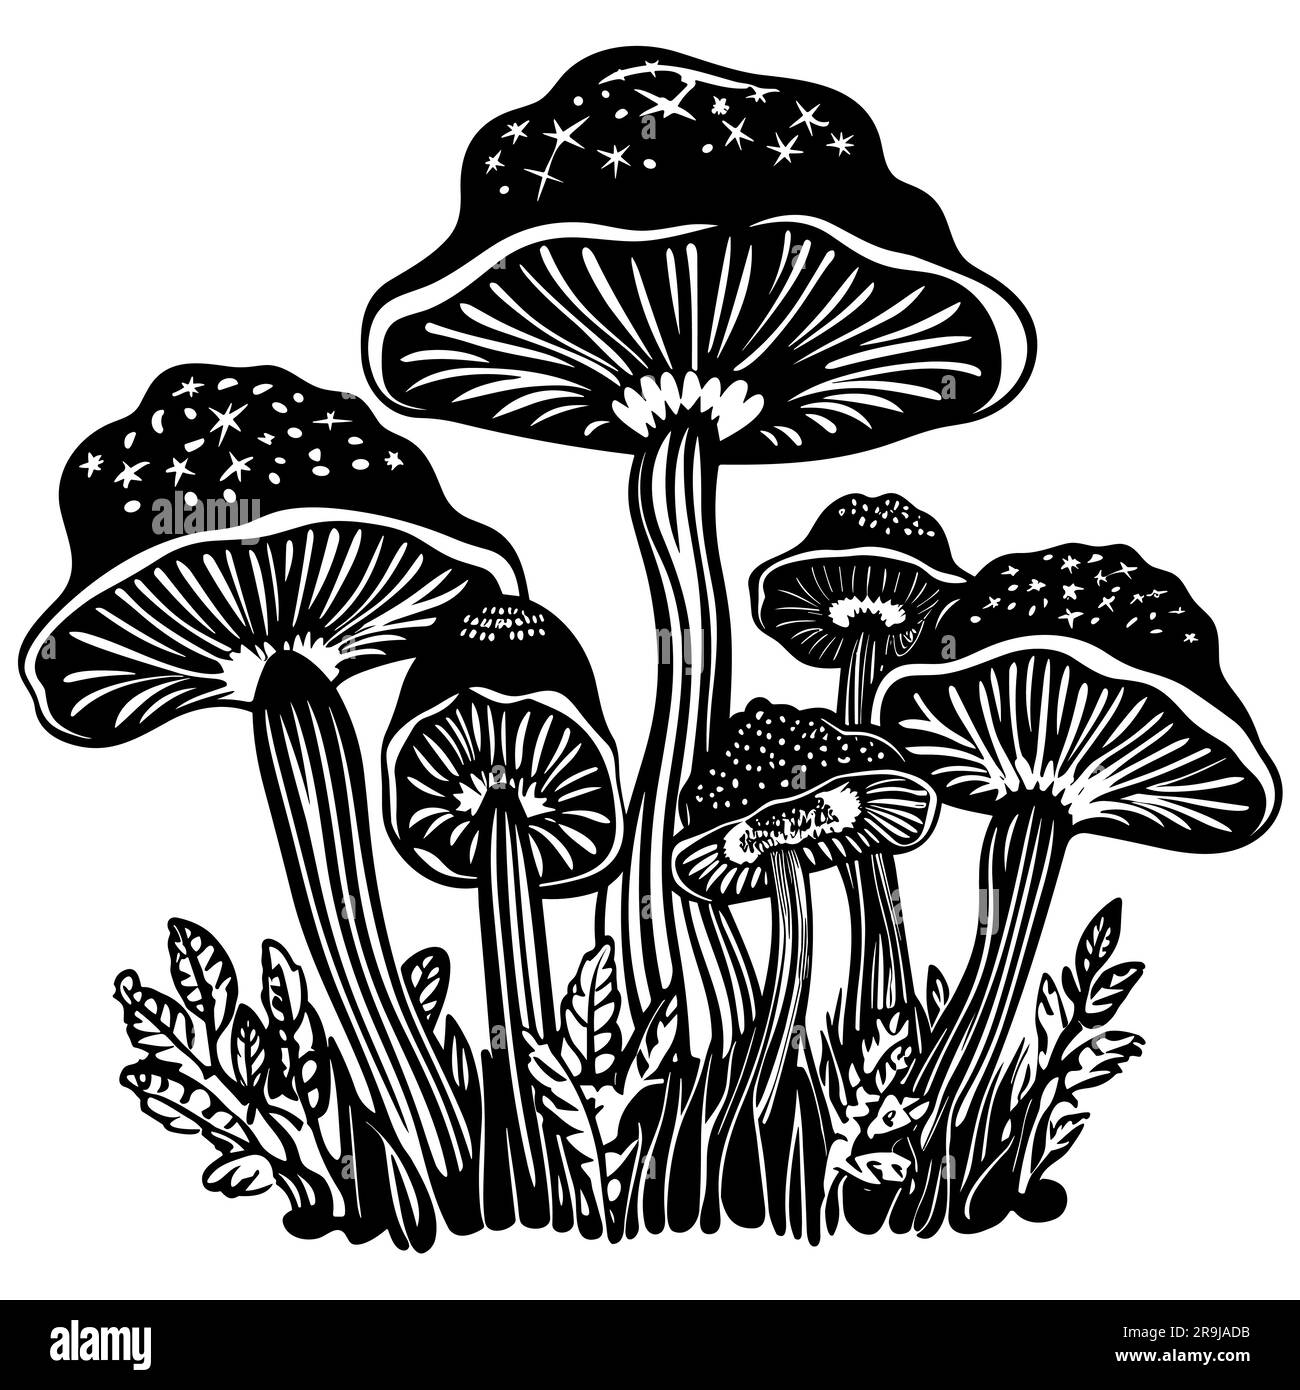 Mushrooms Black and White Stock Vector